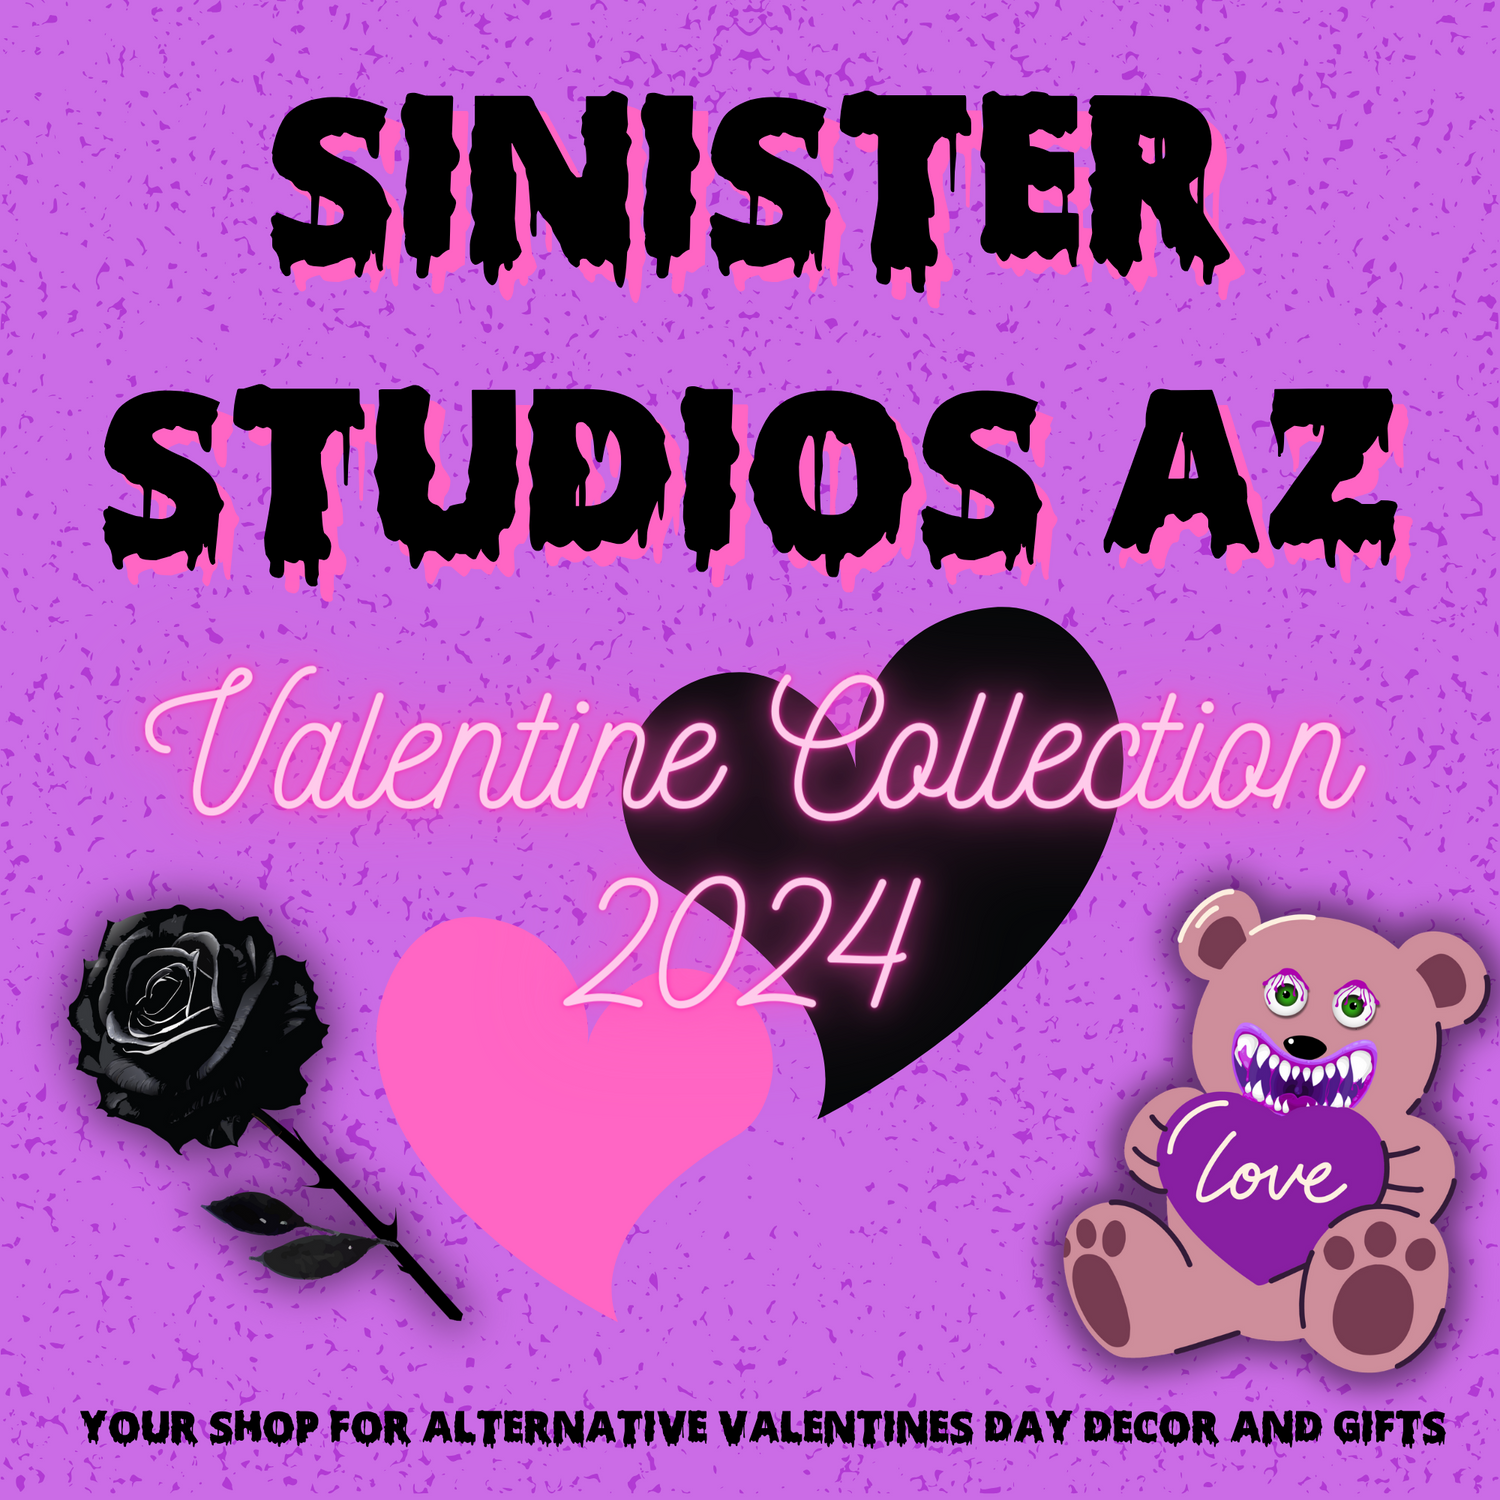 Sinister Valentine Collection